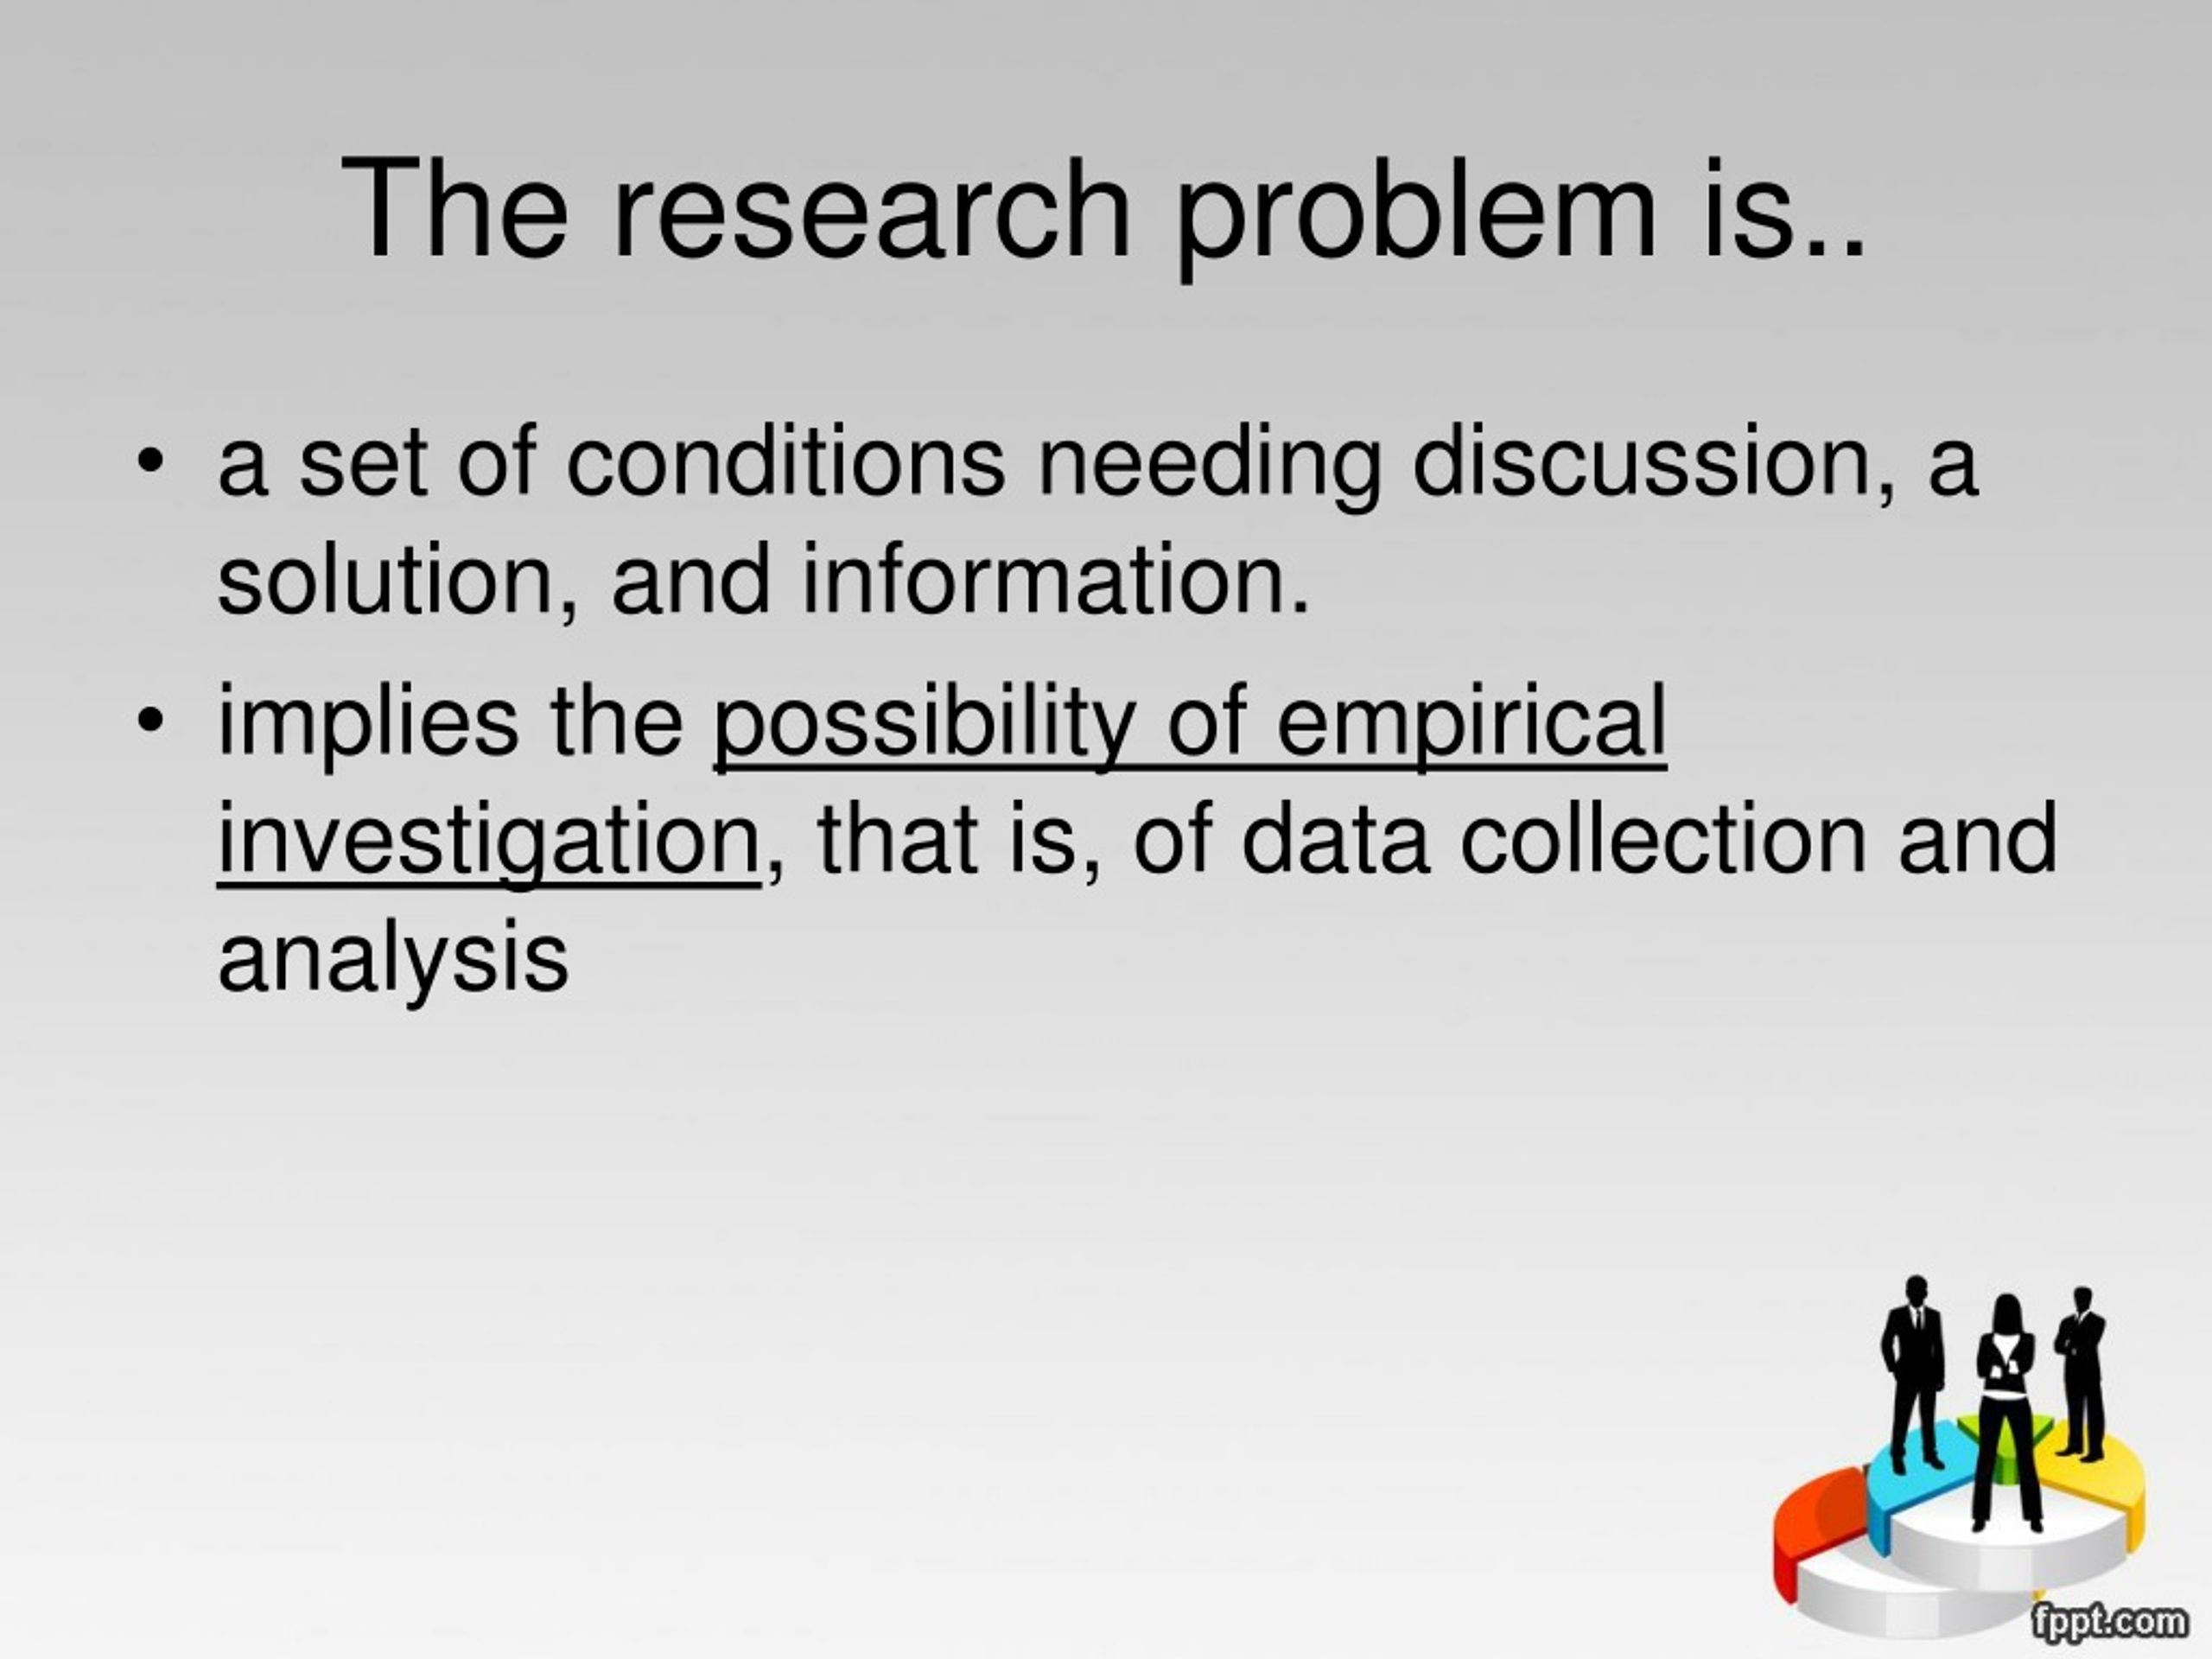 research problem definition ppt